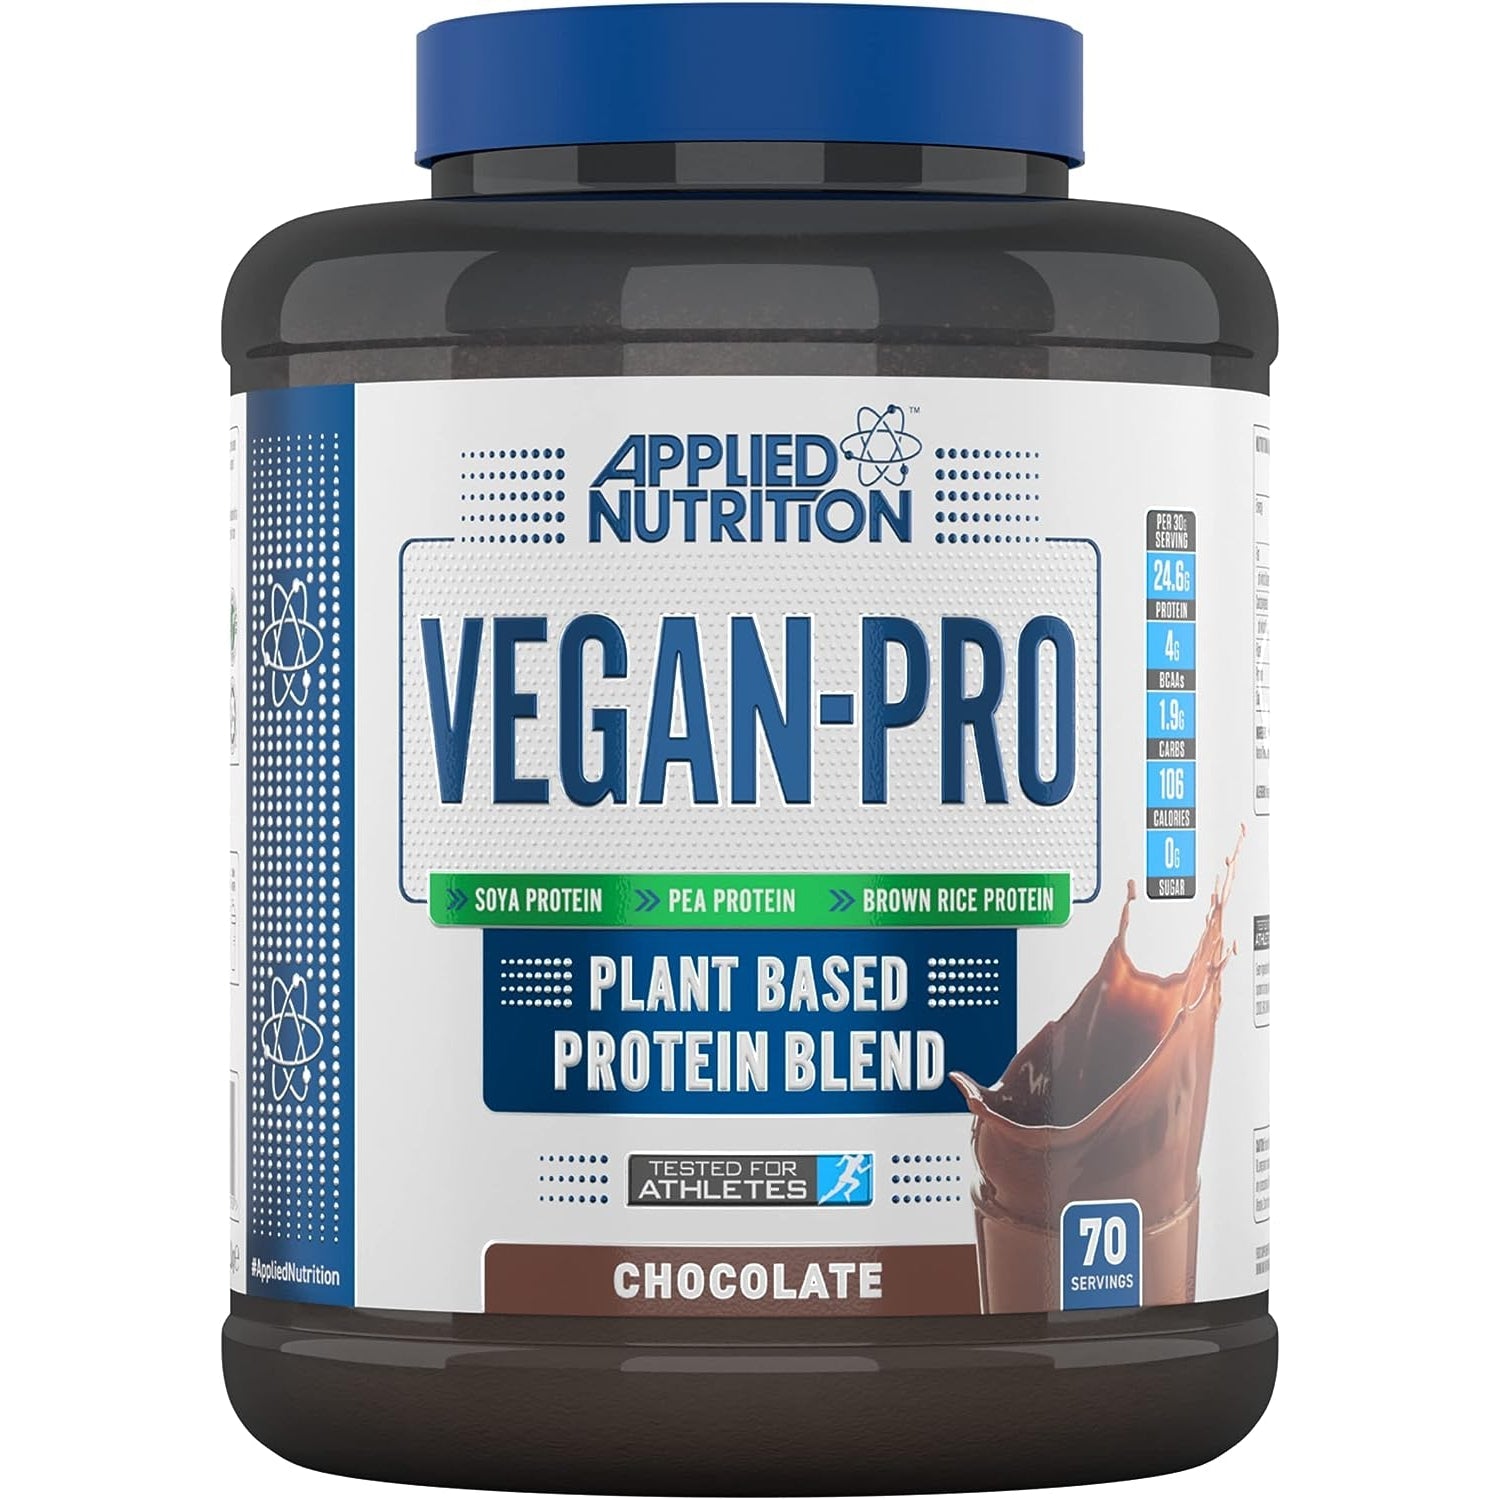 Applied Nutrition Vegan Pro Plant Based Protein Blend Vegan Chocolate 2.1kg - 70 Servings